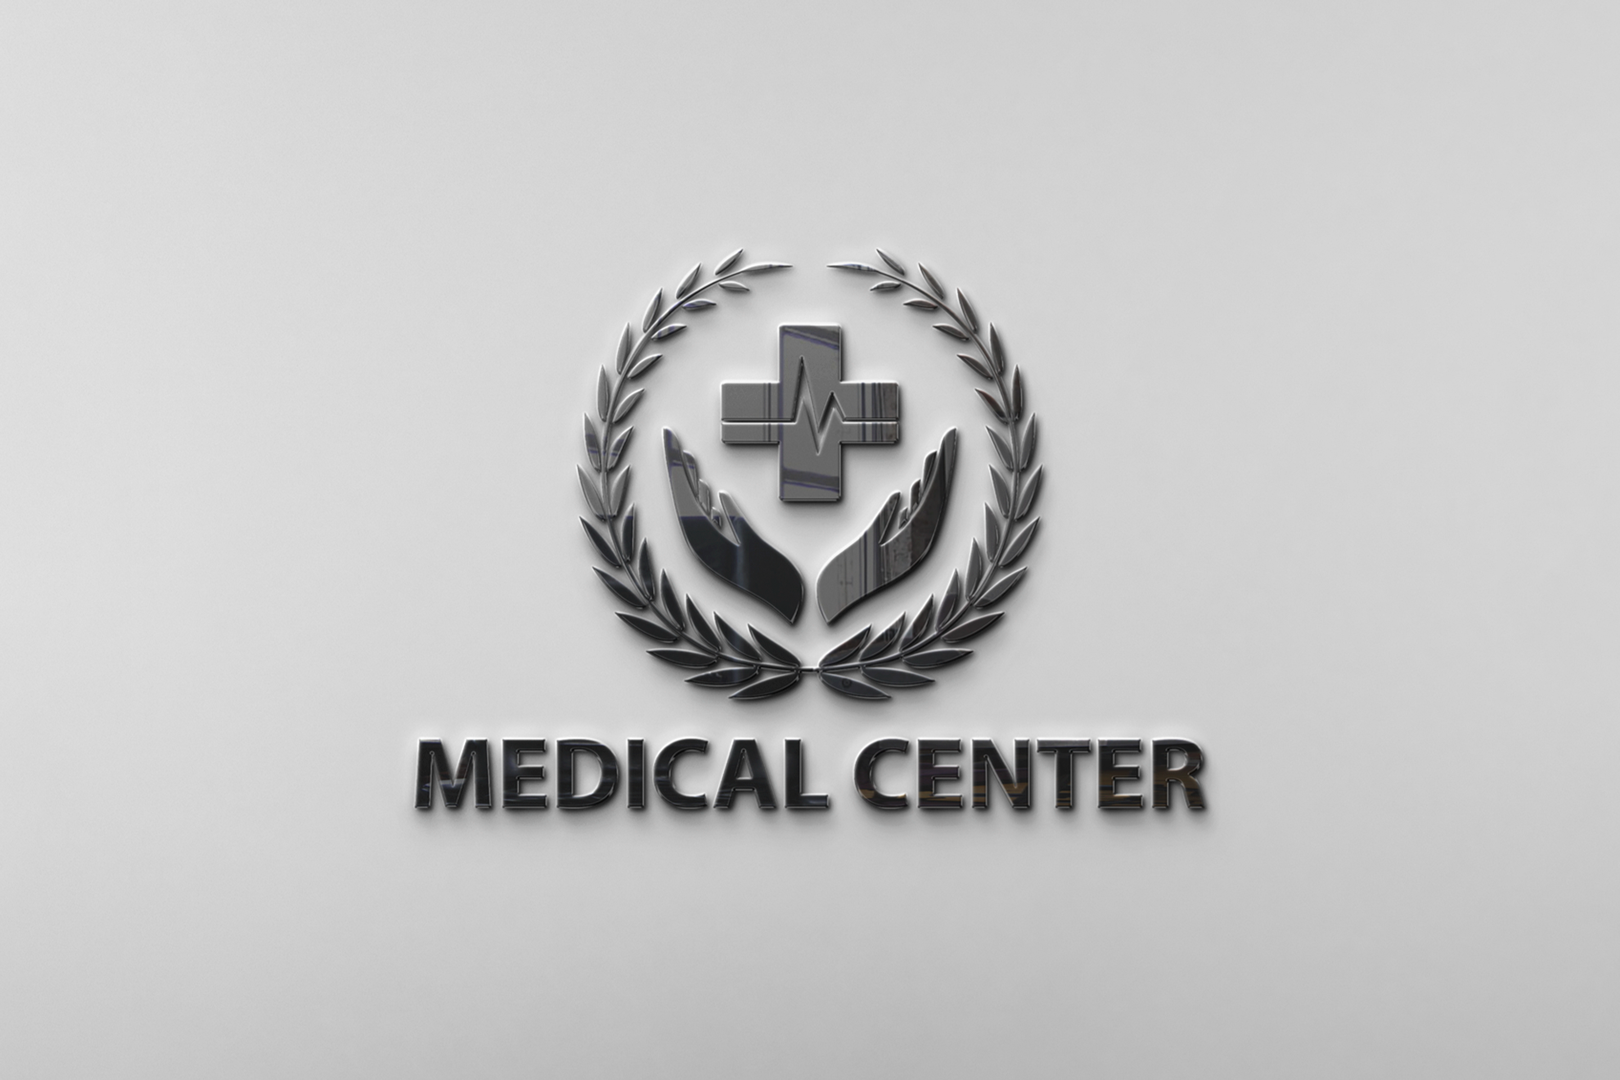 MEDICAL CENTER